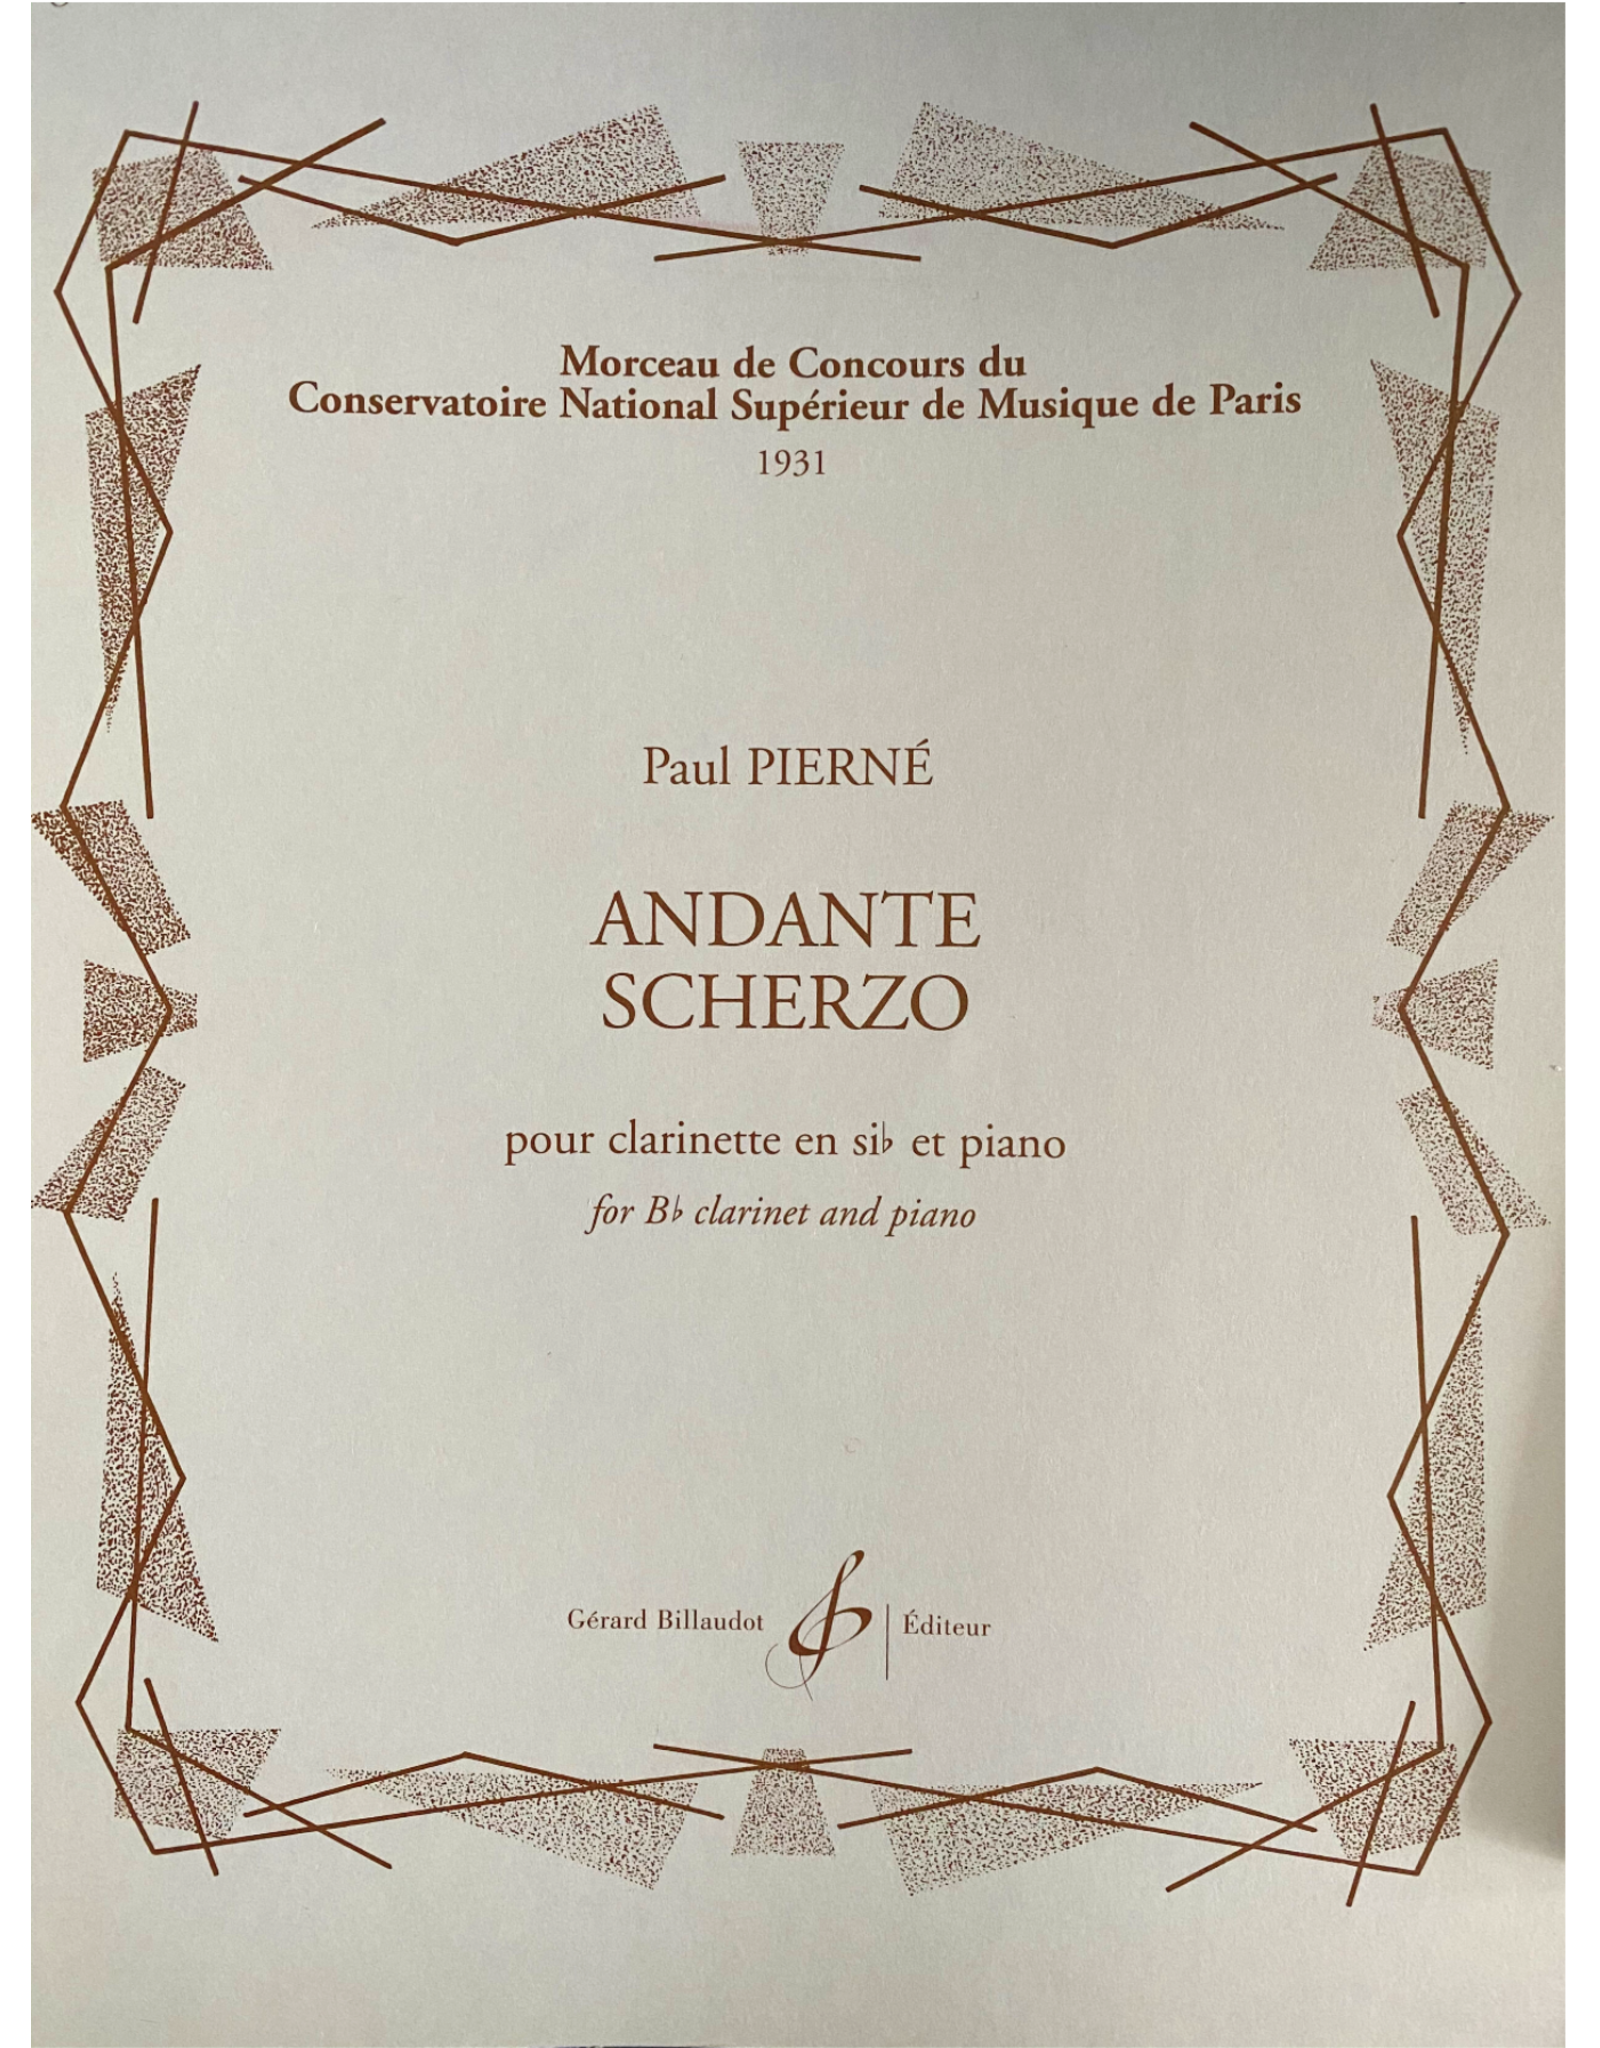 Gerard Billaudot Editeur Pierne Andante Scherzo for Clarinet and Piano